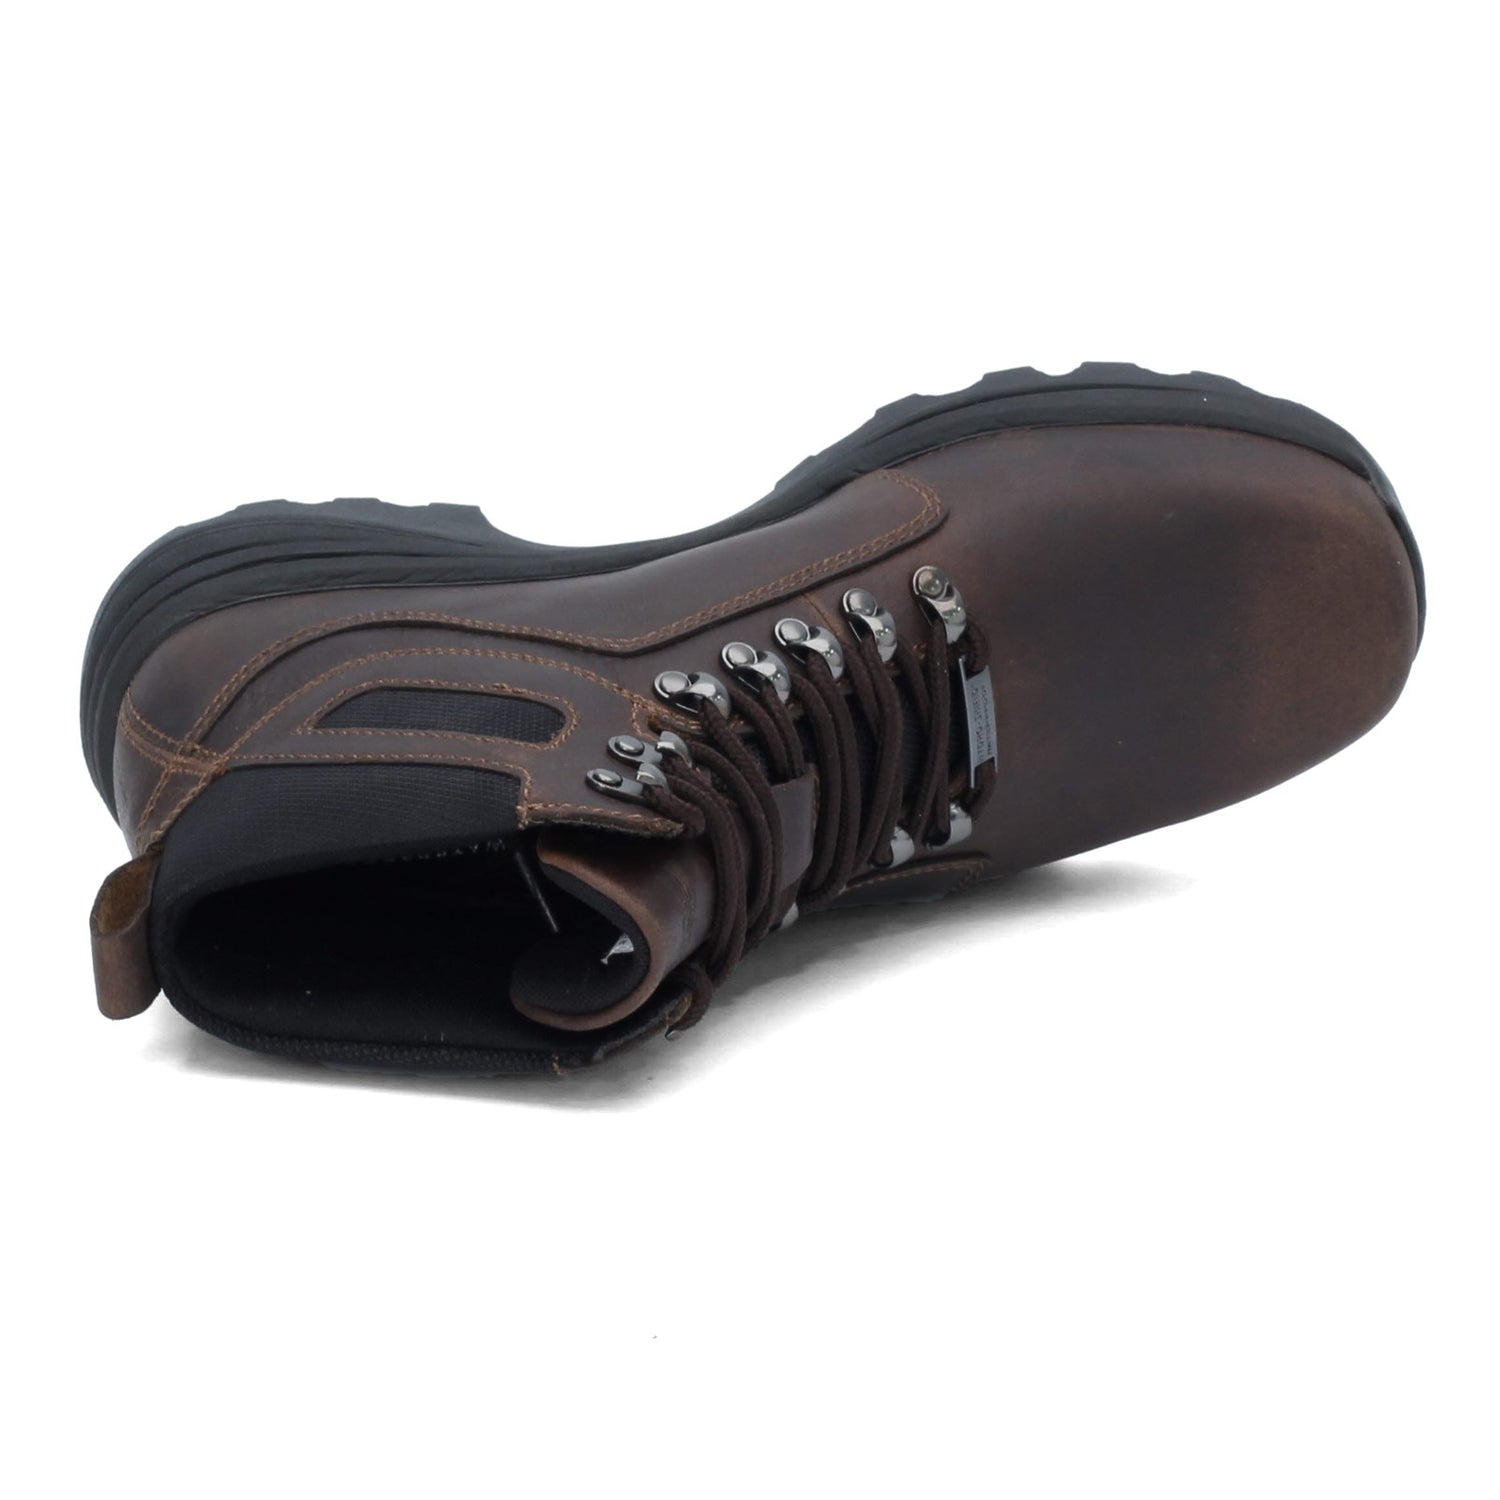 Peltz Shoes  Men's Rockport Elkhart Hiking Boot CHOCOLATE V74463